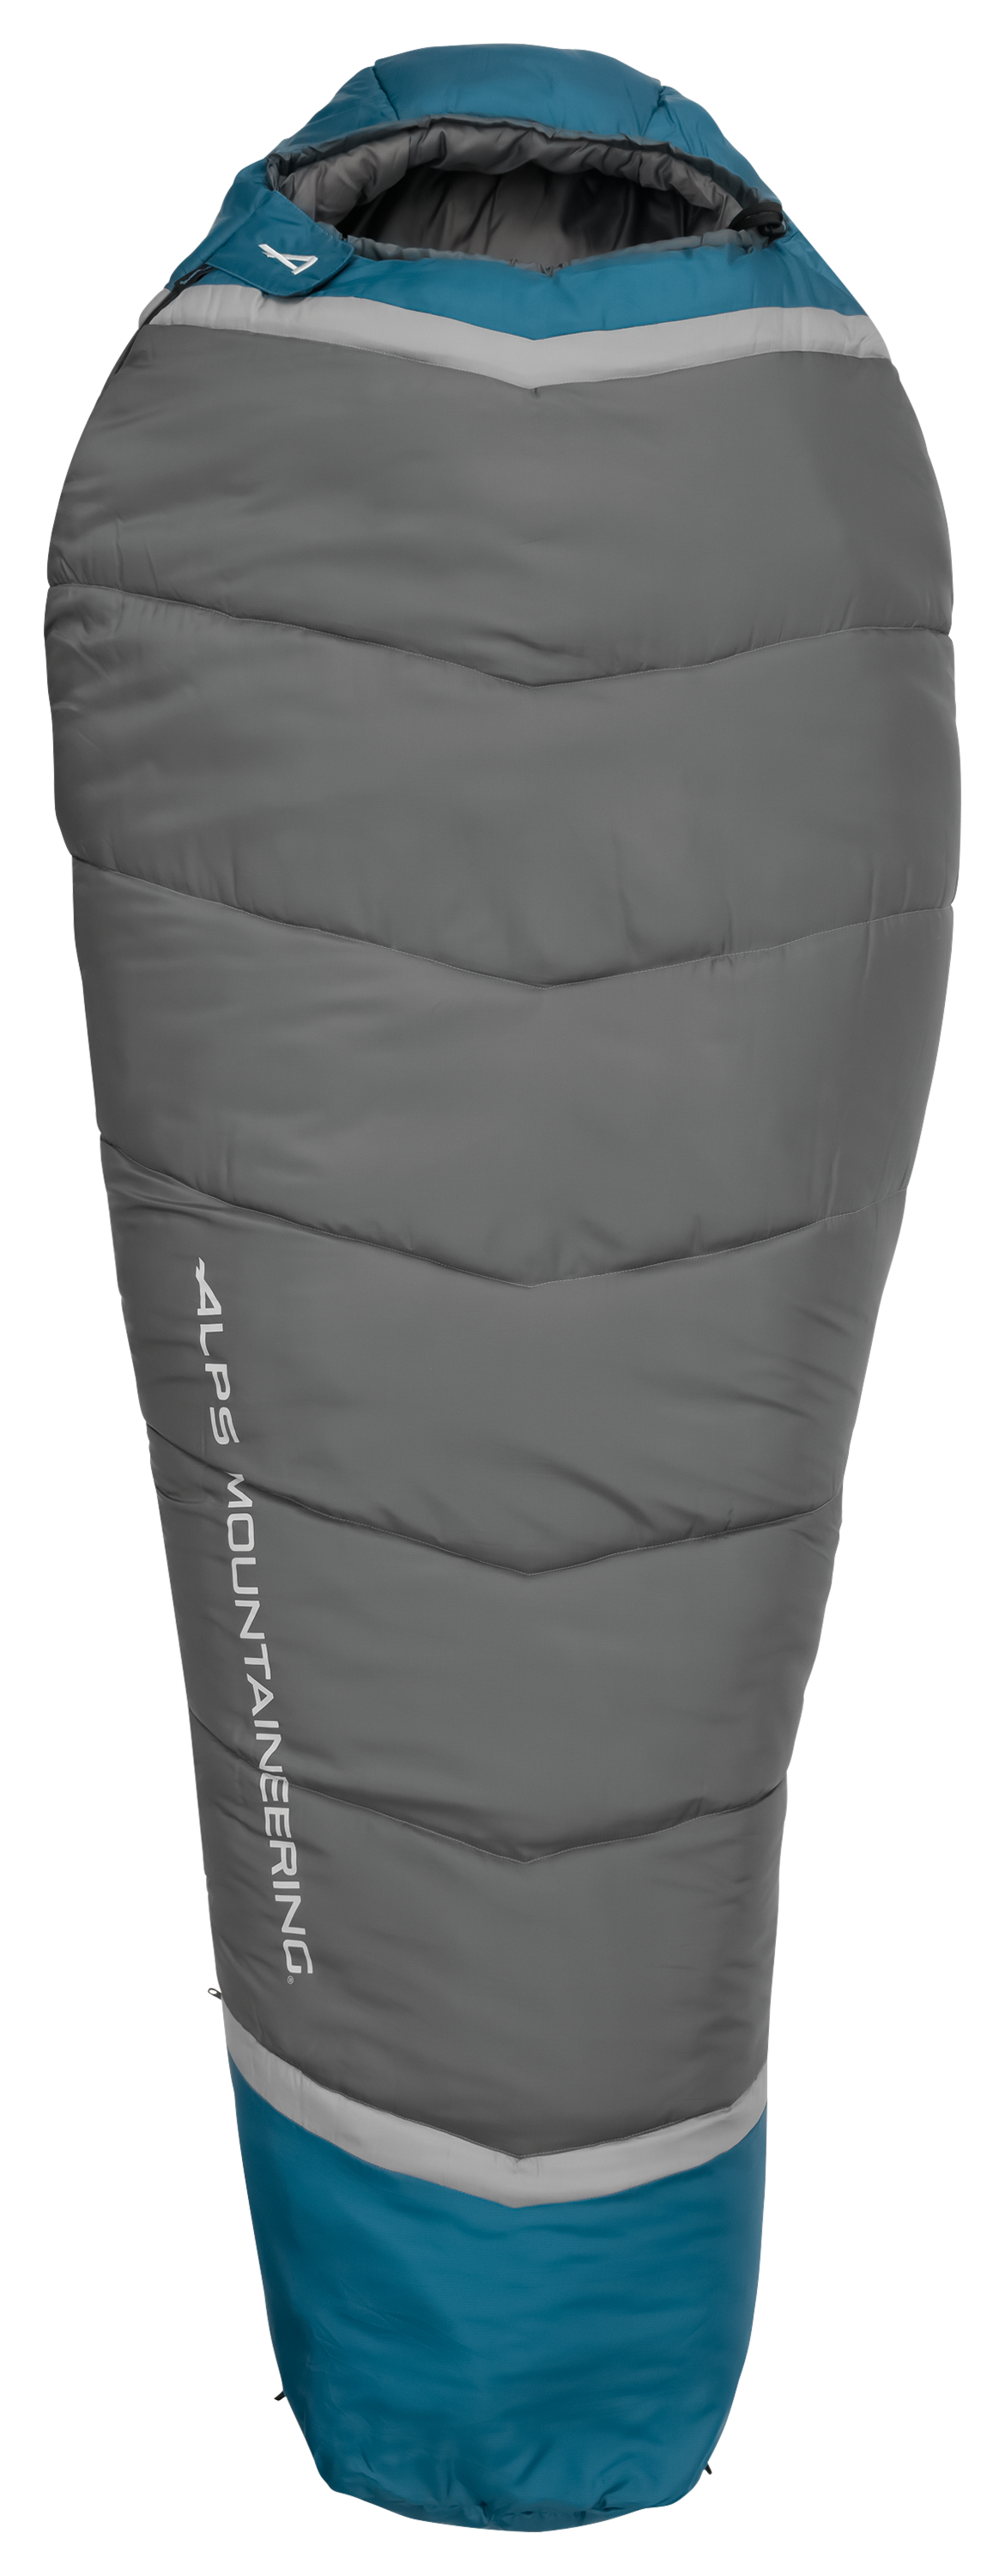 Alps Mountaineering Blaze 0 Mummy Sleeping Bag - XL